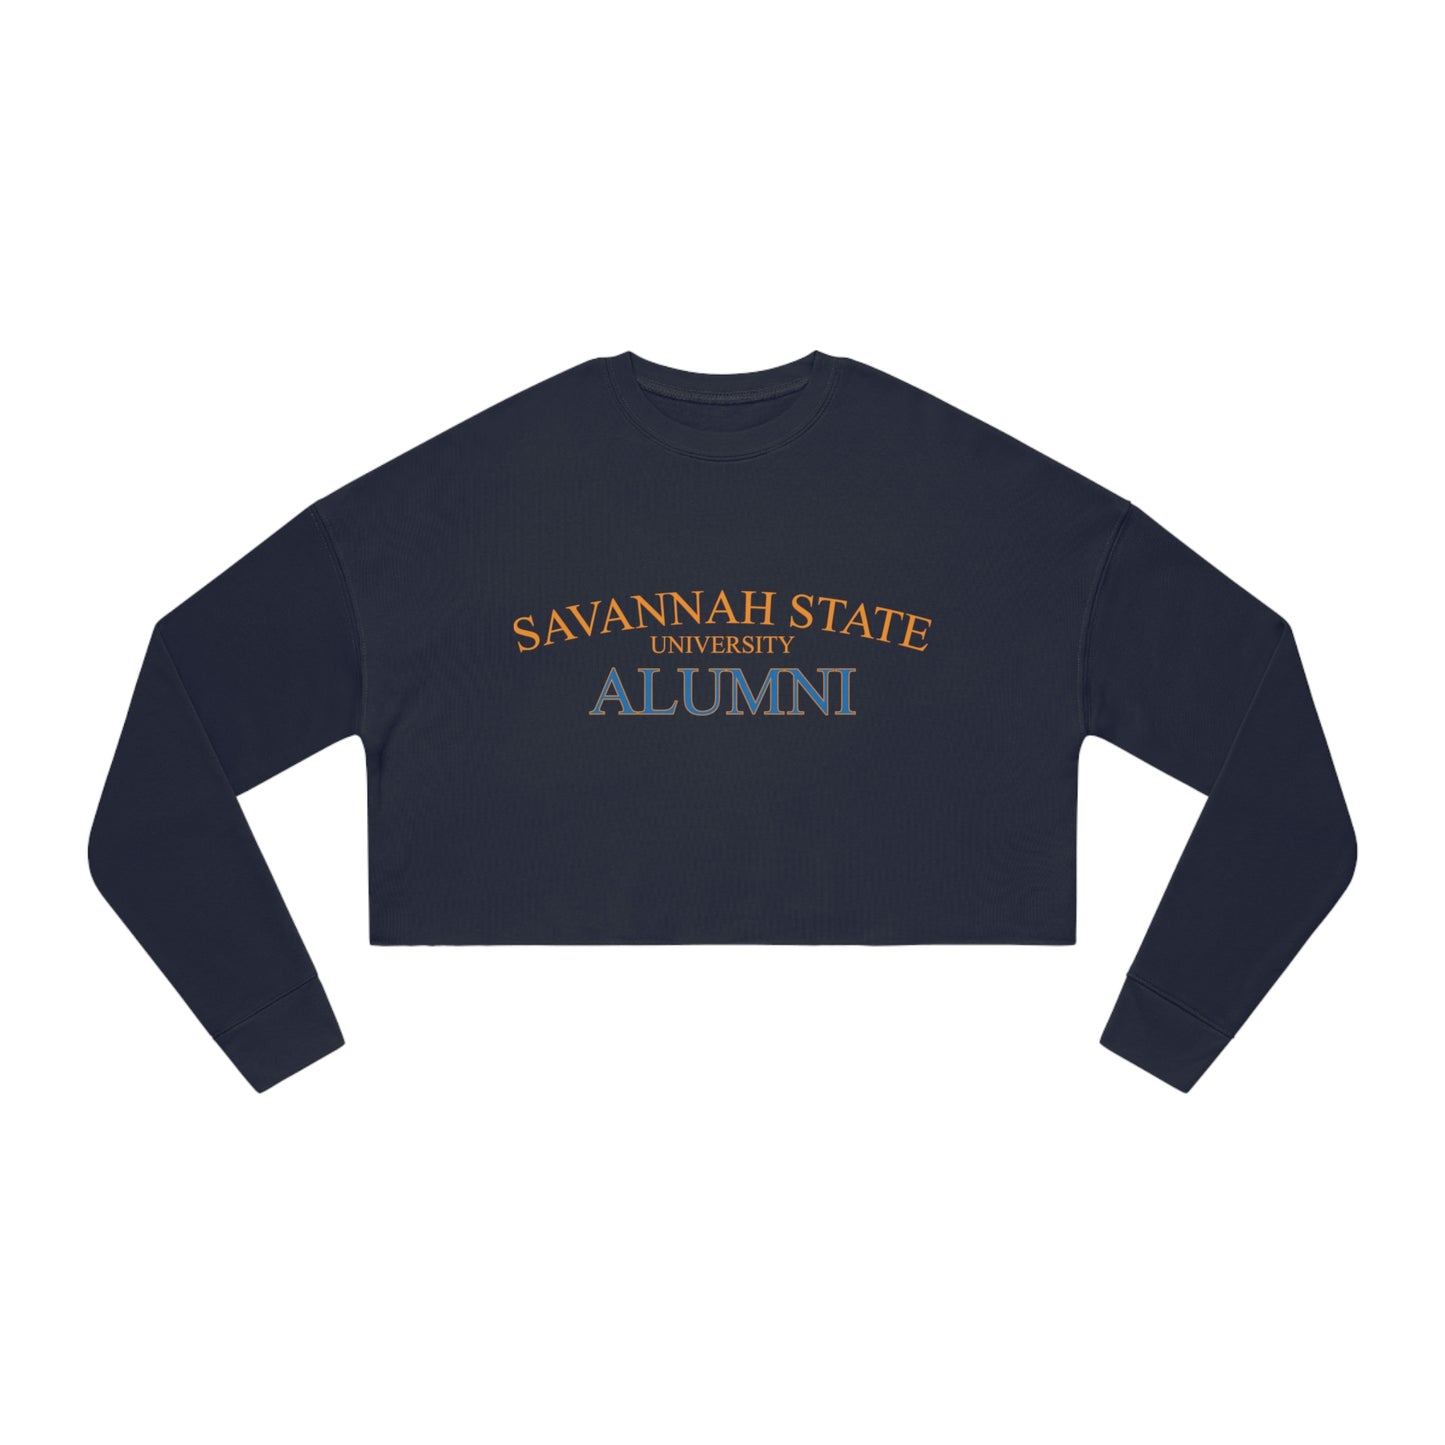 HBCU Love (Savannah State University Alumni/ Women's Cropped Sweatshirt)